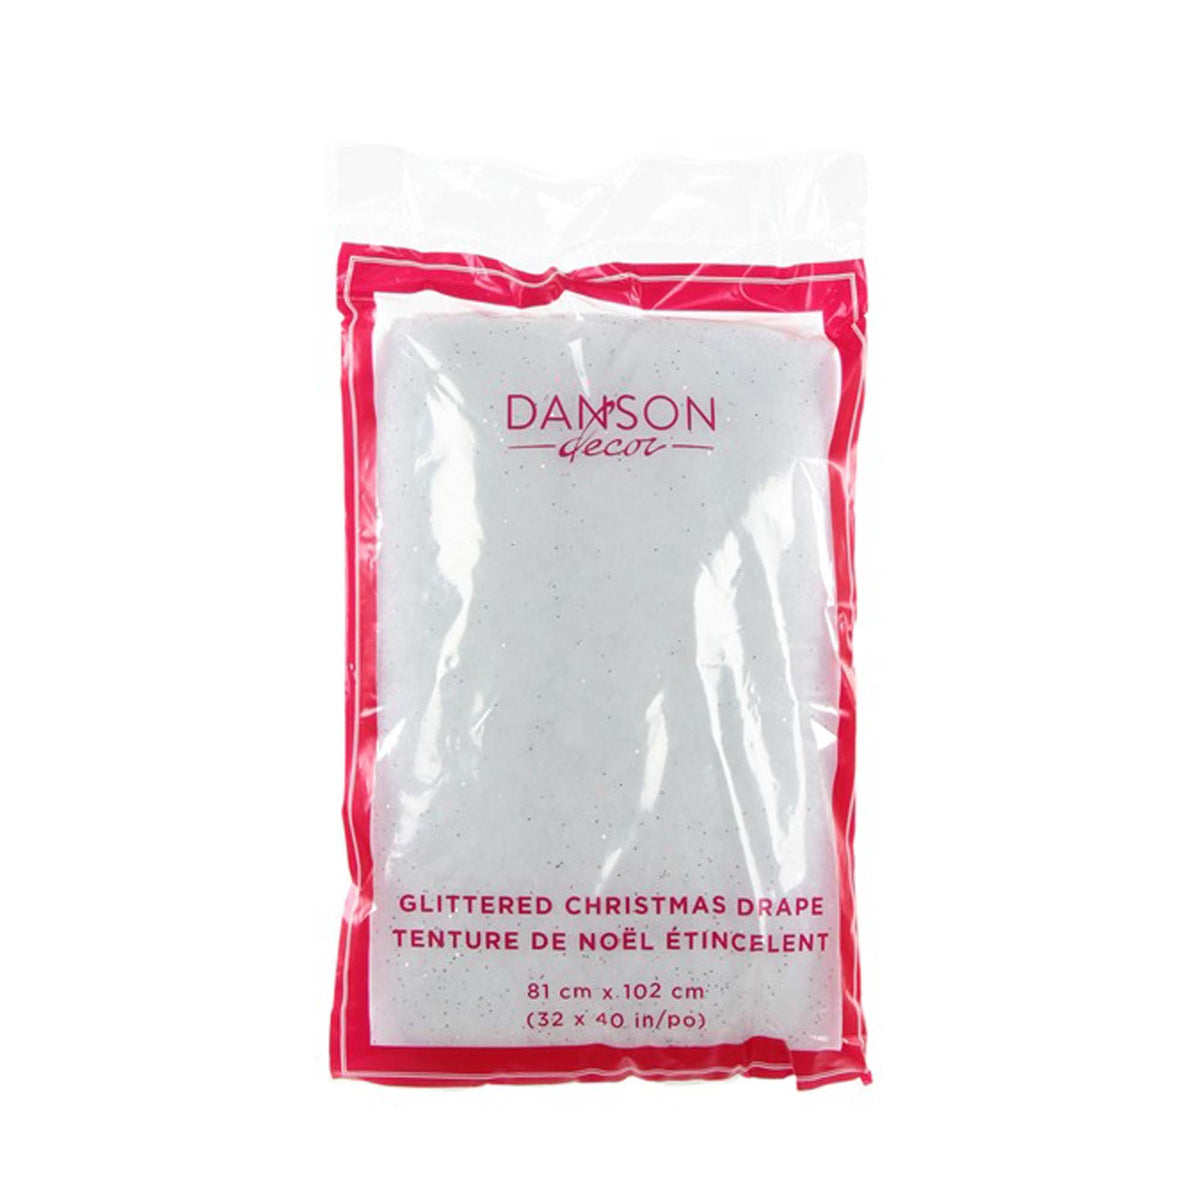 DANSON DECOR Christmas White Glittered Christmas Drape, 32 x 40 Inches, 1 Count